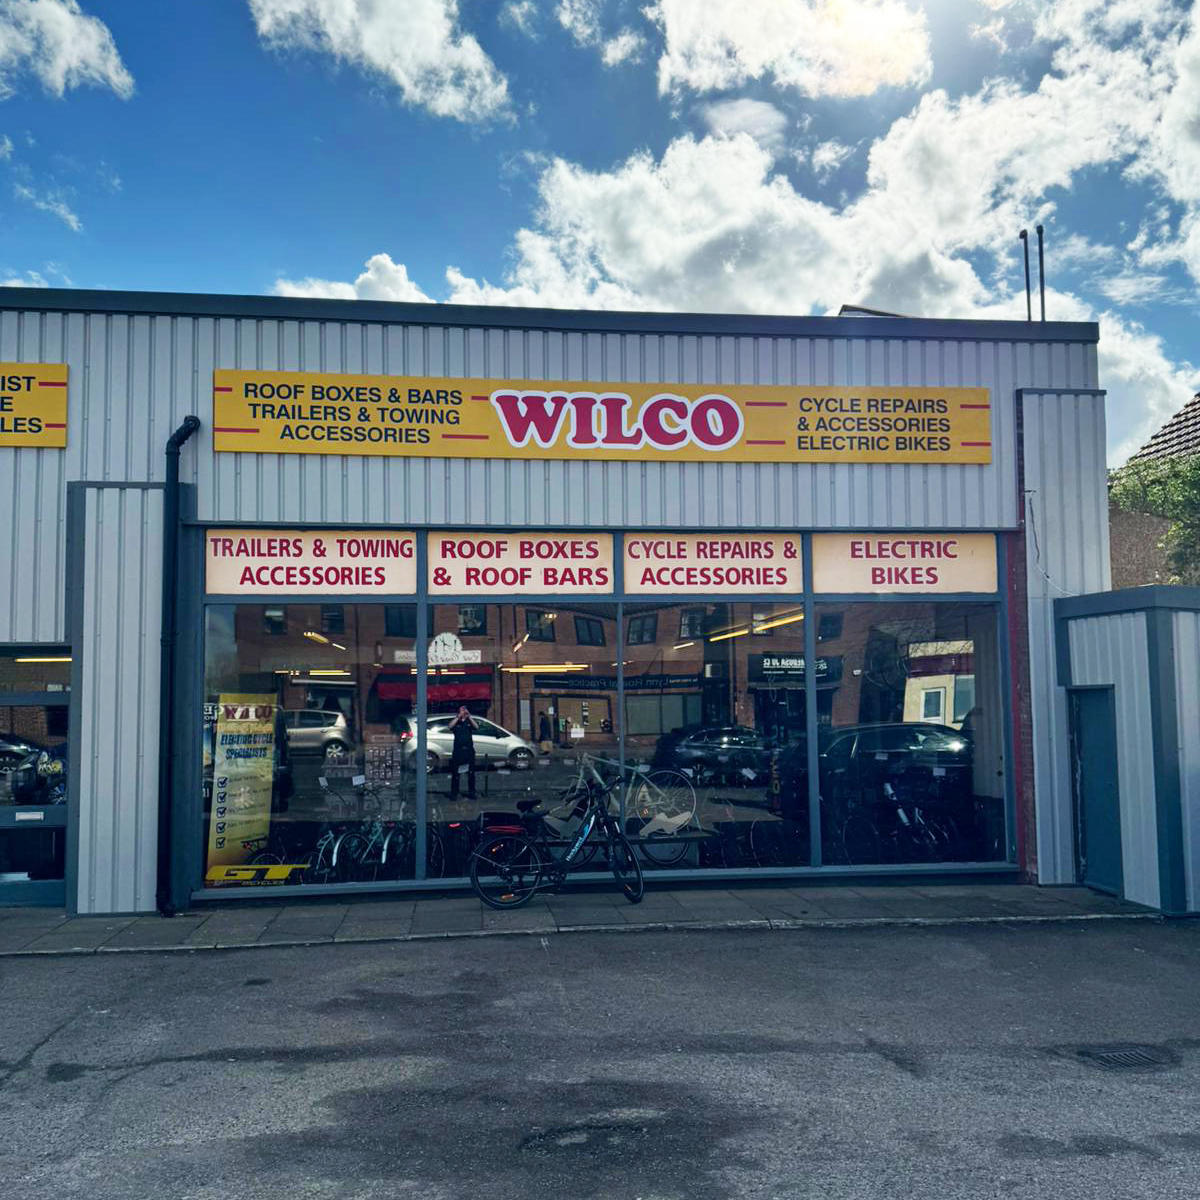 Wilco Motor Spares in King's Lynn Wilco Motor Spares King's Lynn 01553 765093